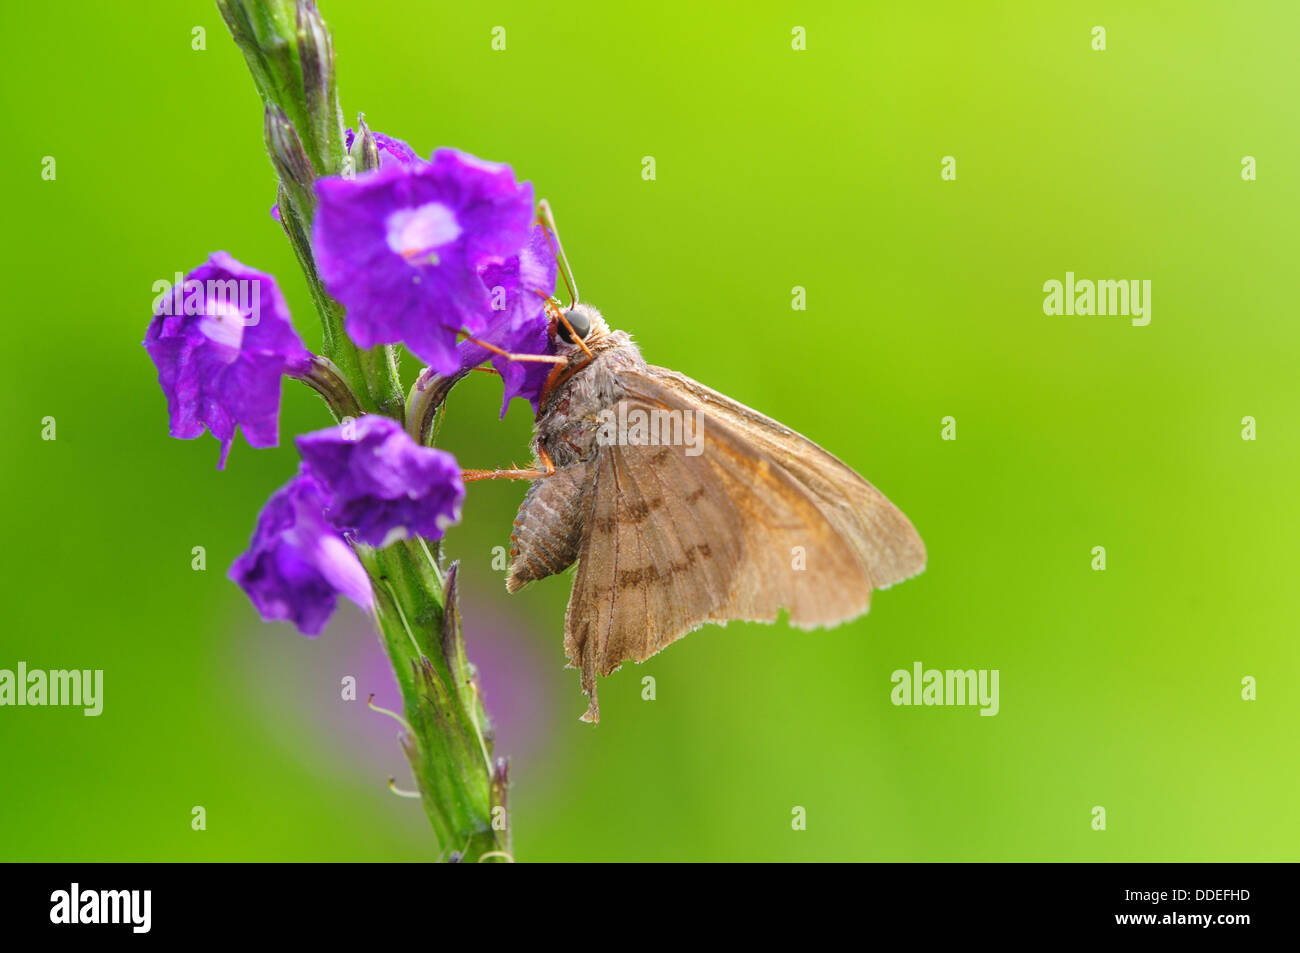 Small skipper butterfly on a purple flower Stock Photo